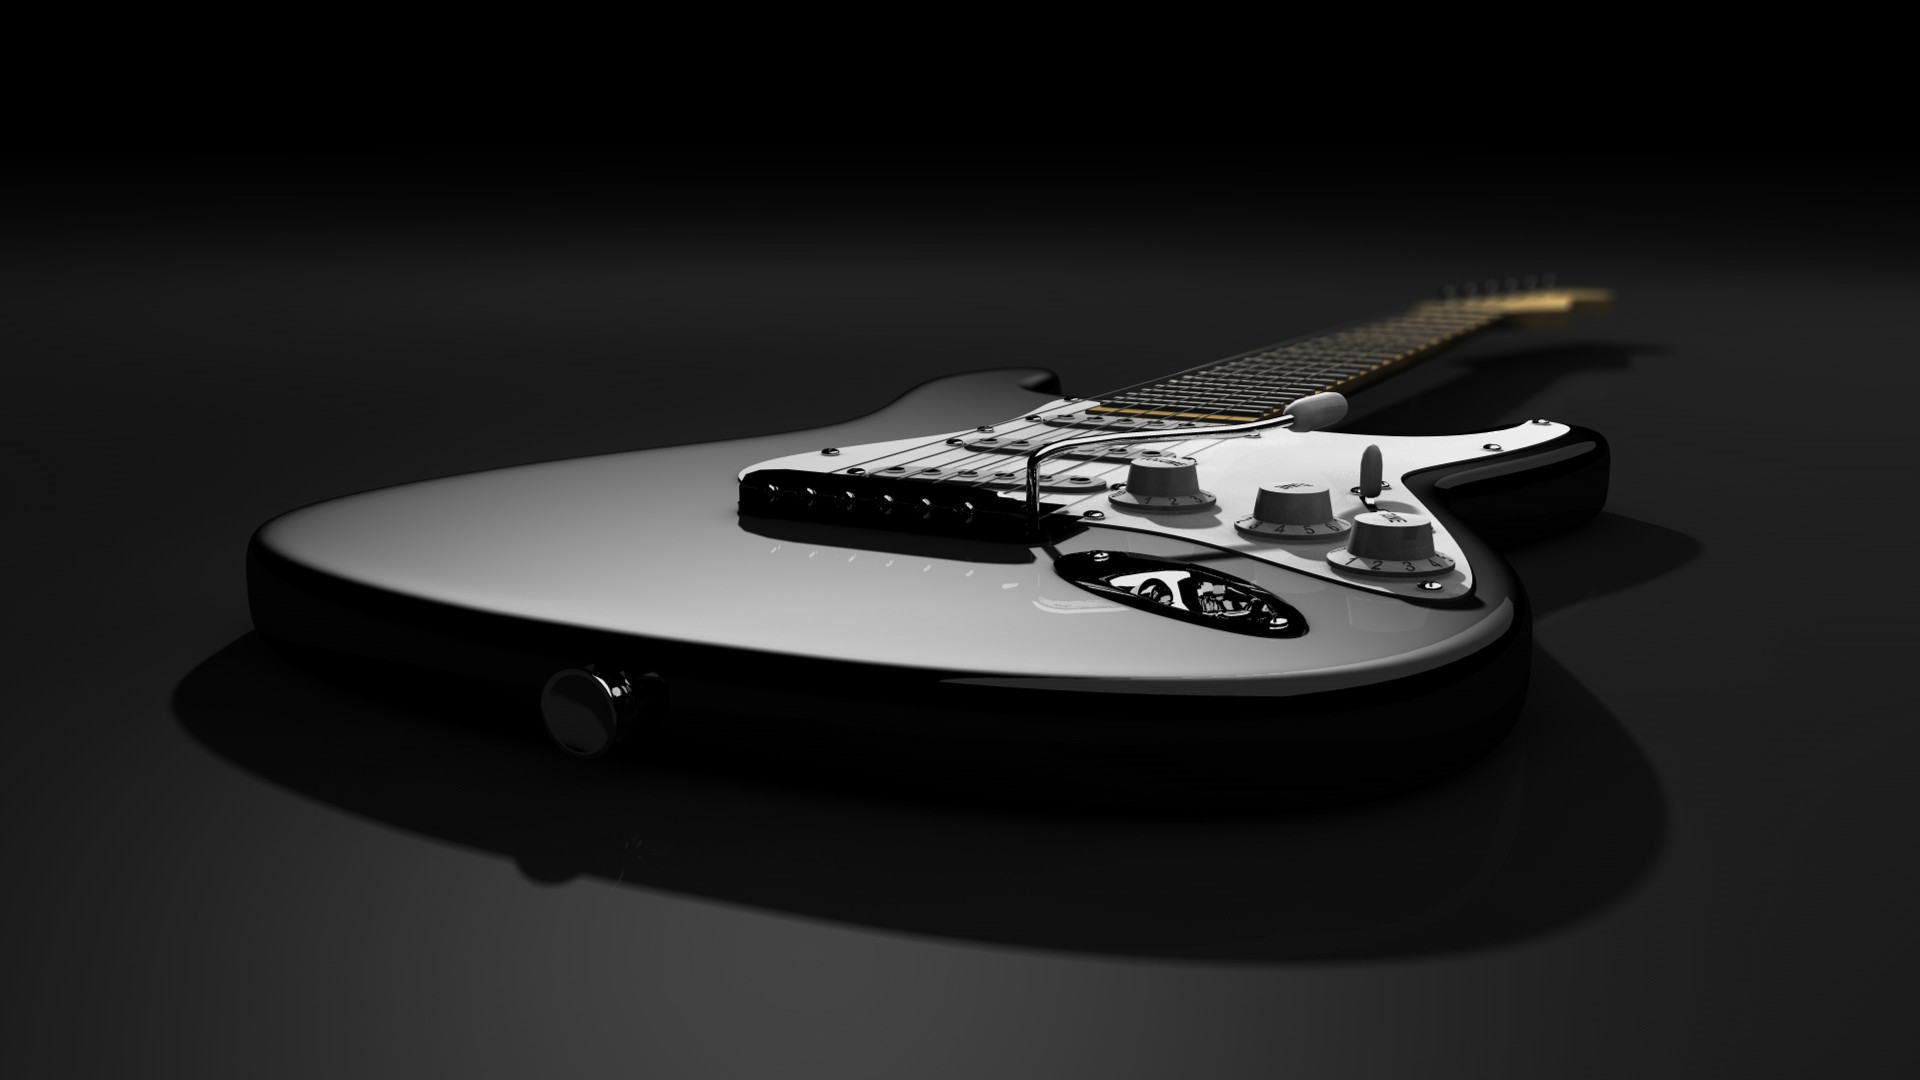 1920x1080 Fender Guitar Wallpapers For Desktop 2575 Hd Wallpapers In Music